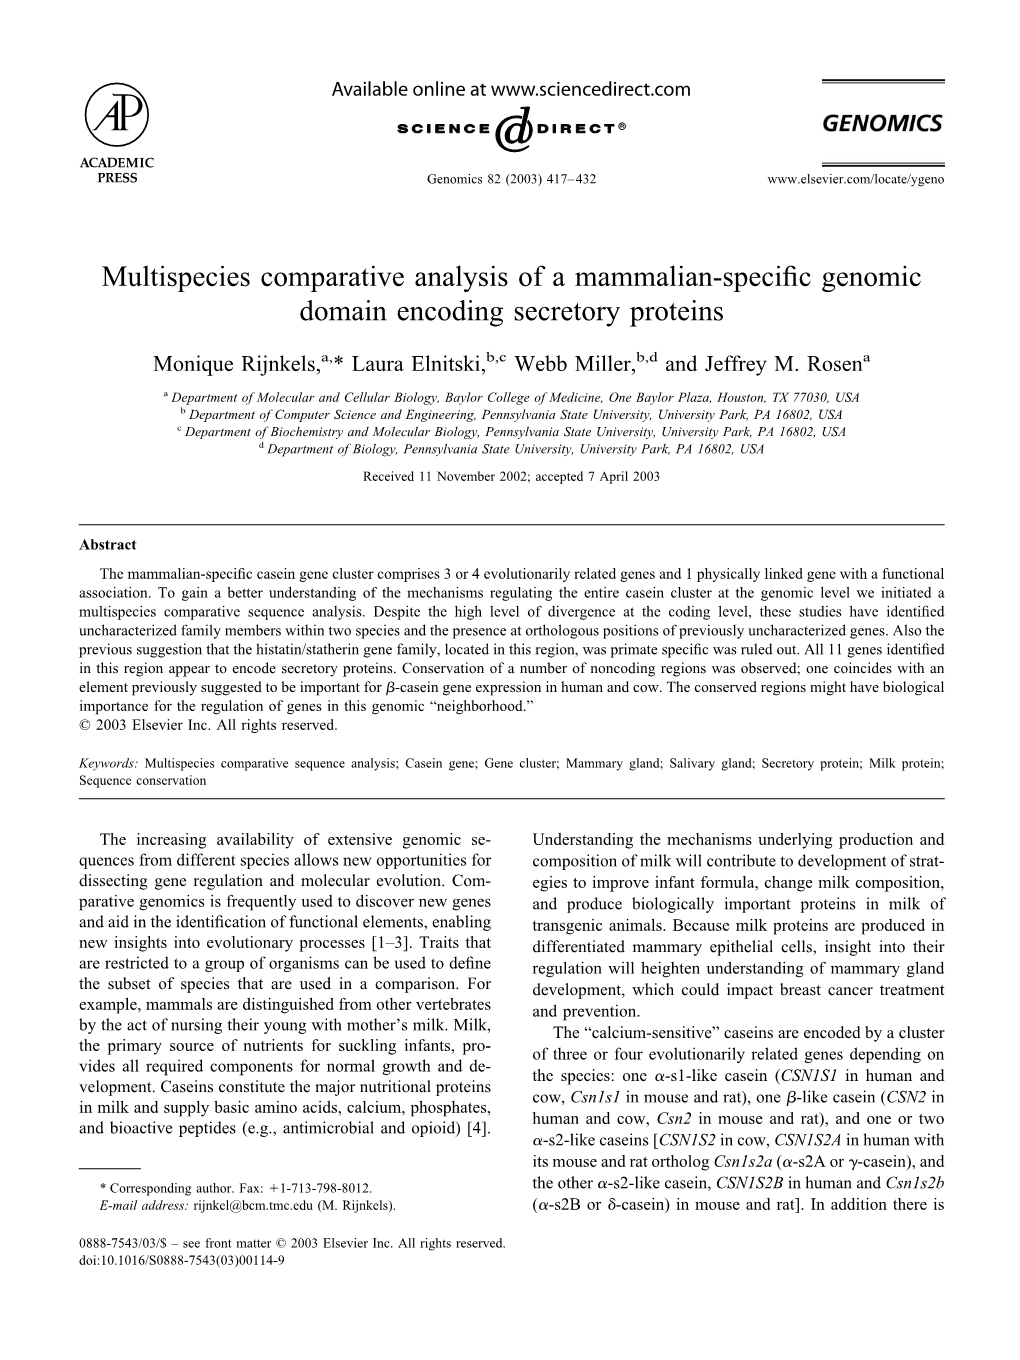 Multispecies Comparative Analysis of a Mammalian-Specific Genomic Domain Encoding Secretory Proteins